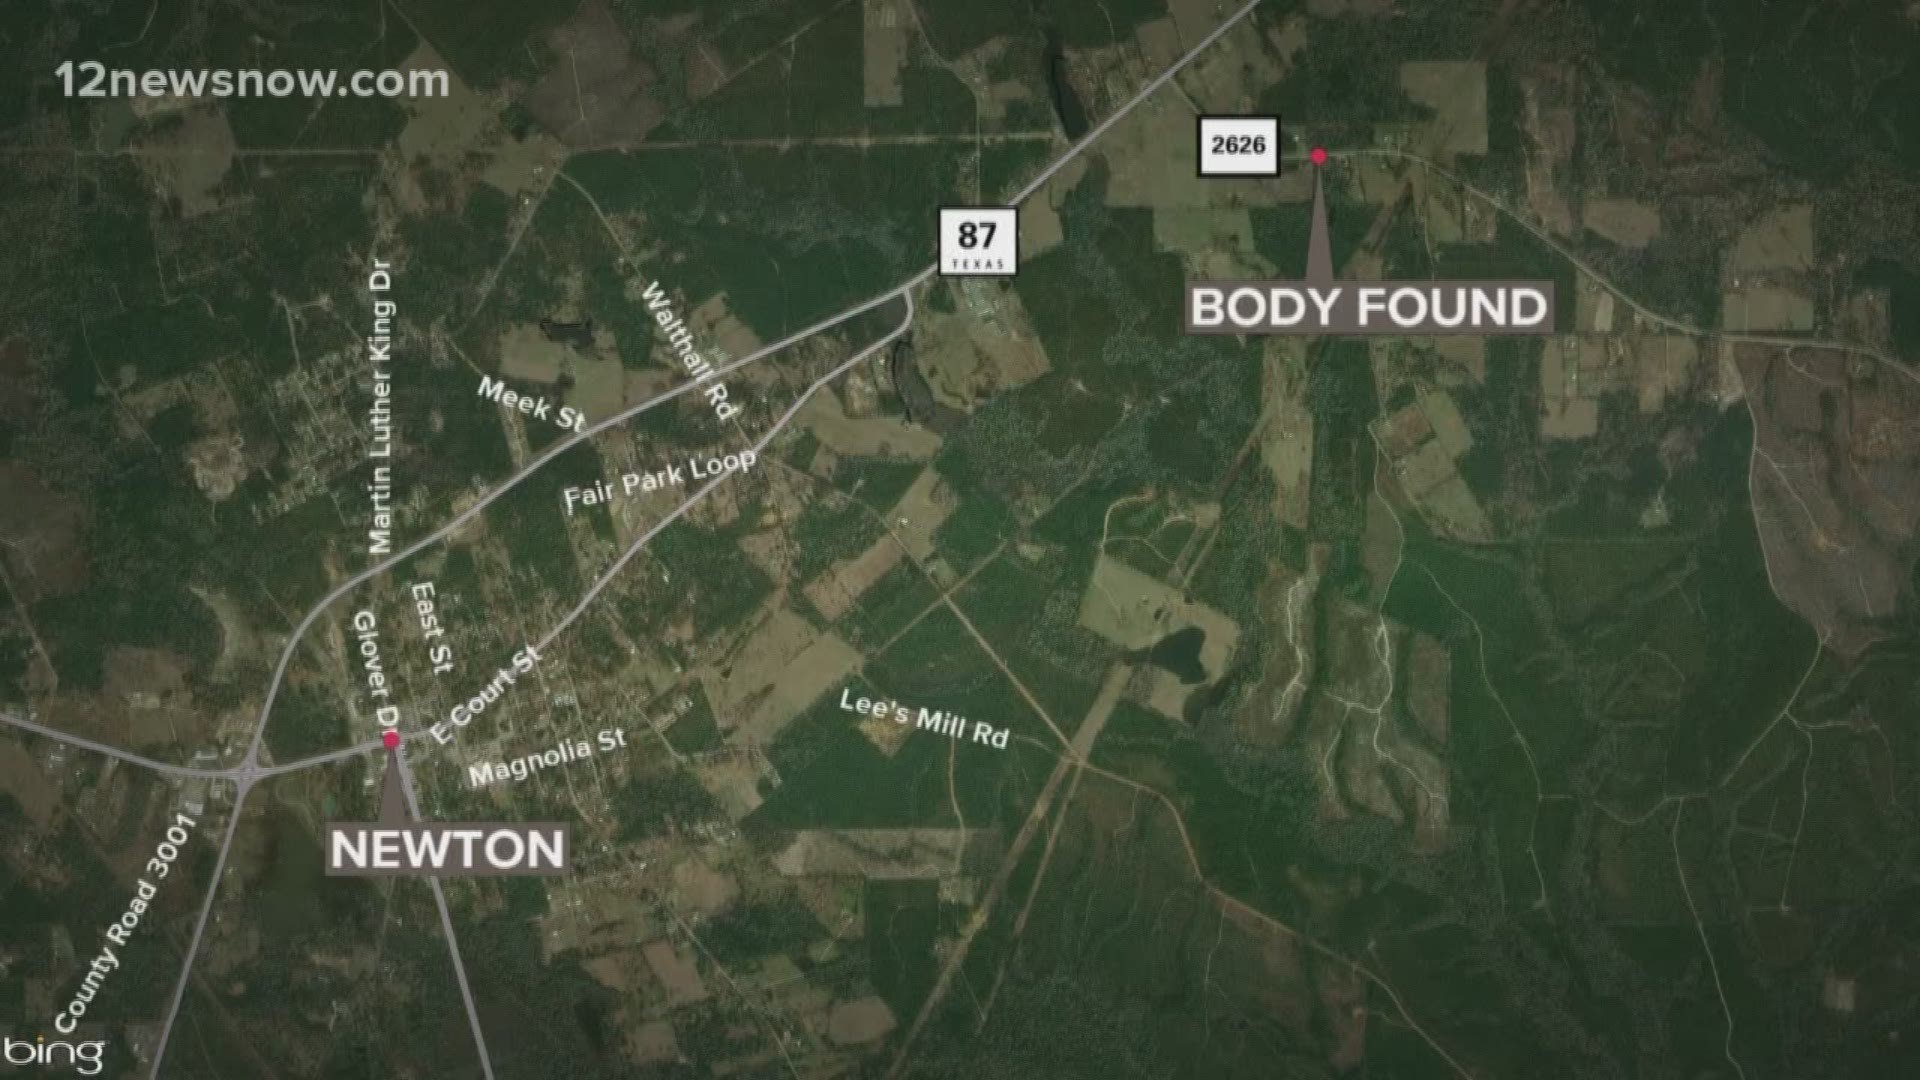 Deputies have identified the woman as Ashley Lynn Carey of the Navasota area.